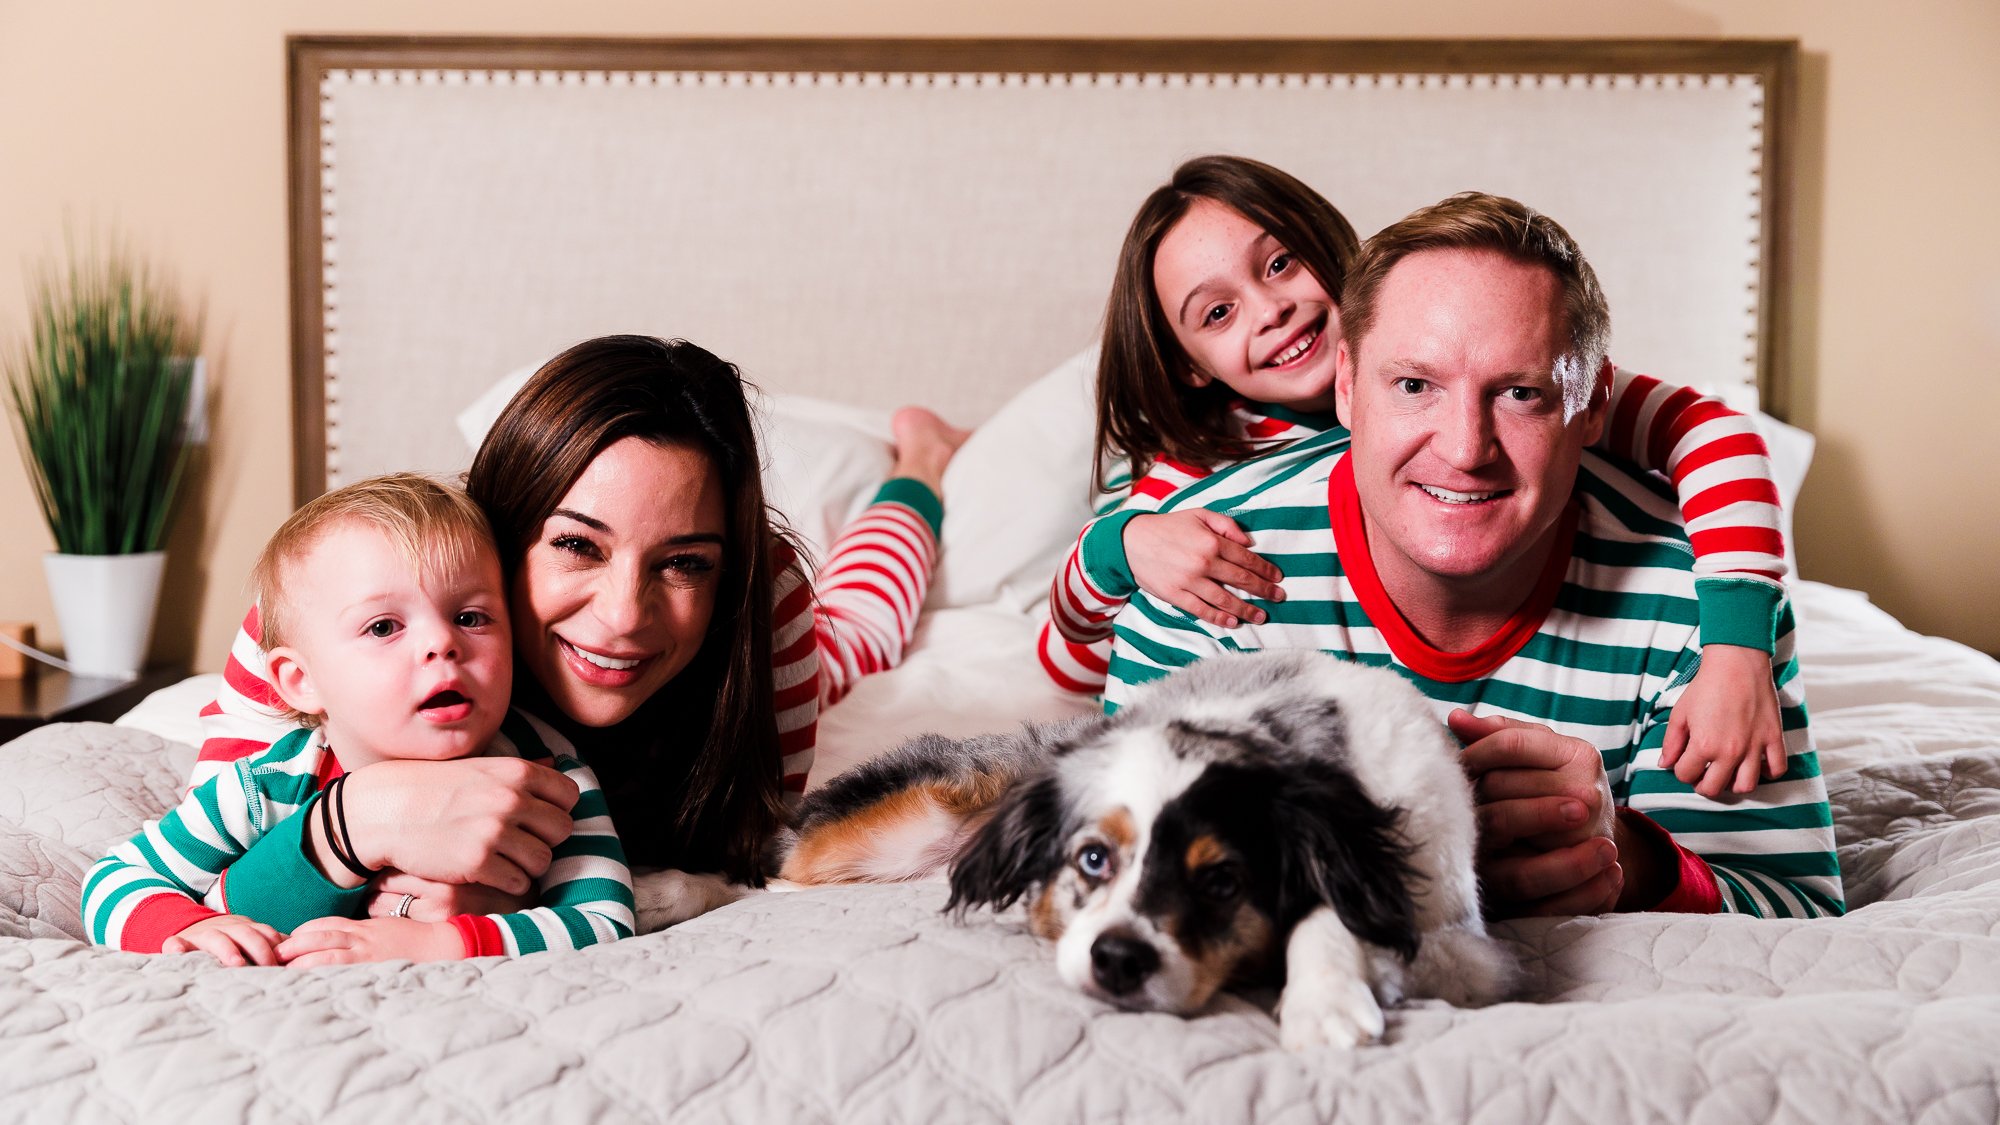 The Yerke Family: Matching Christmas PJs